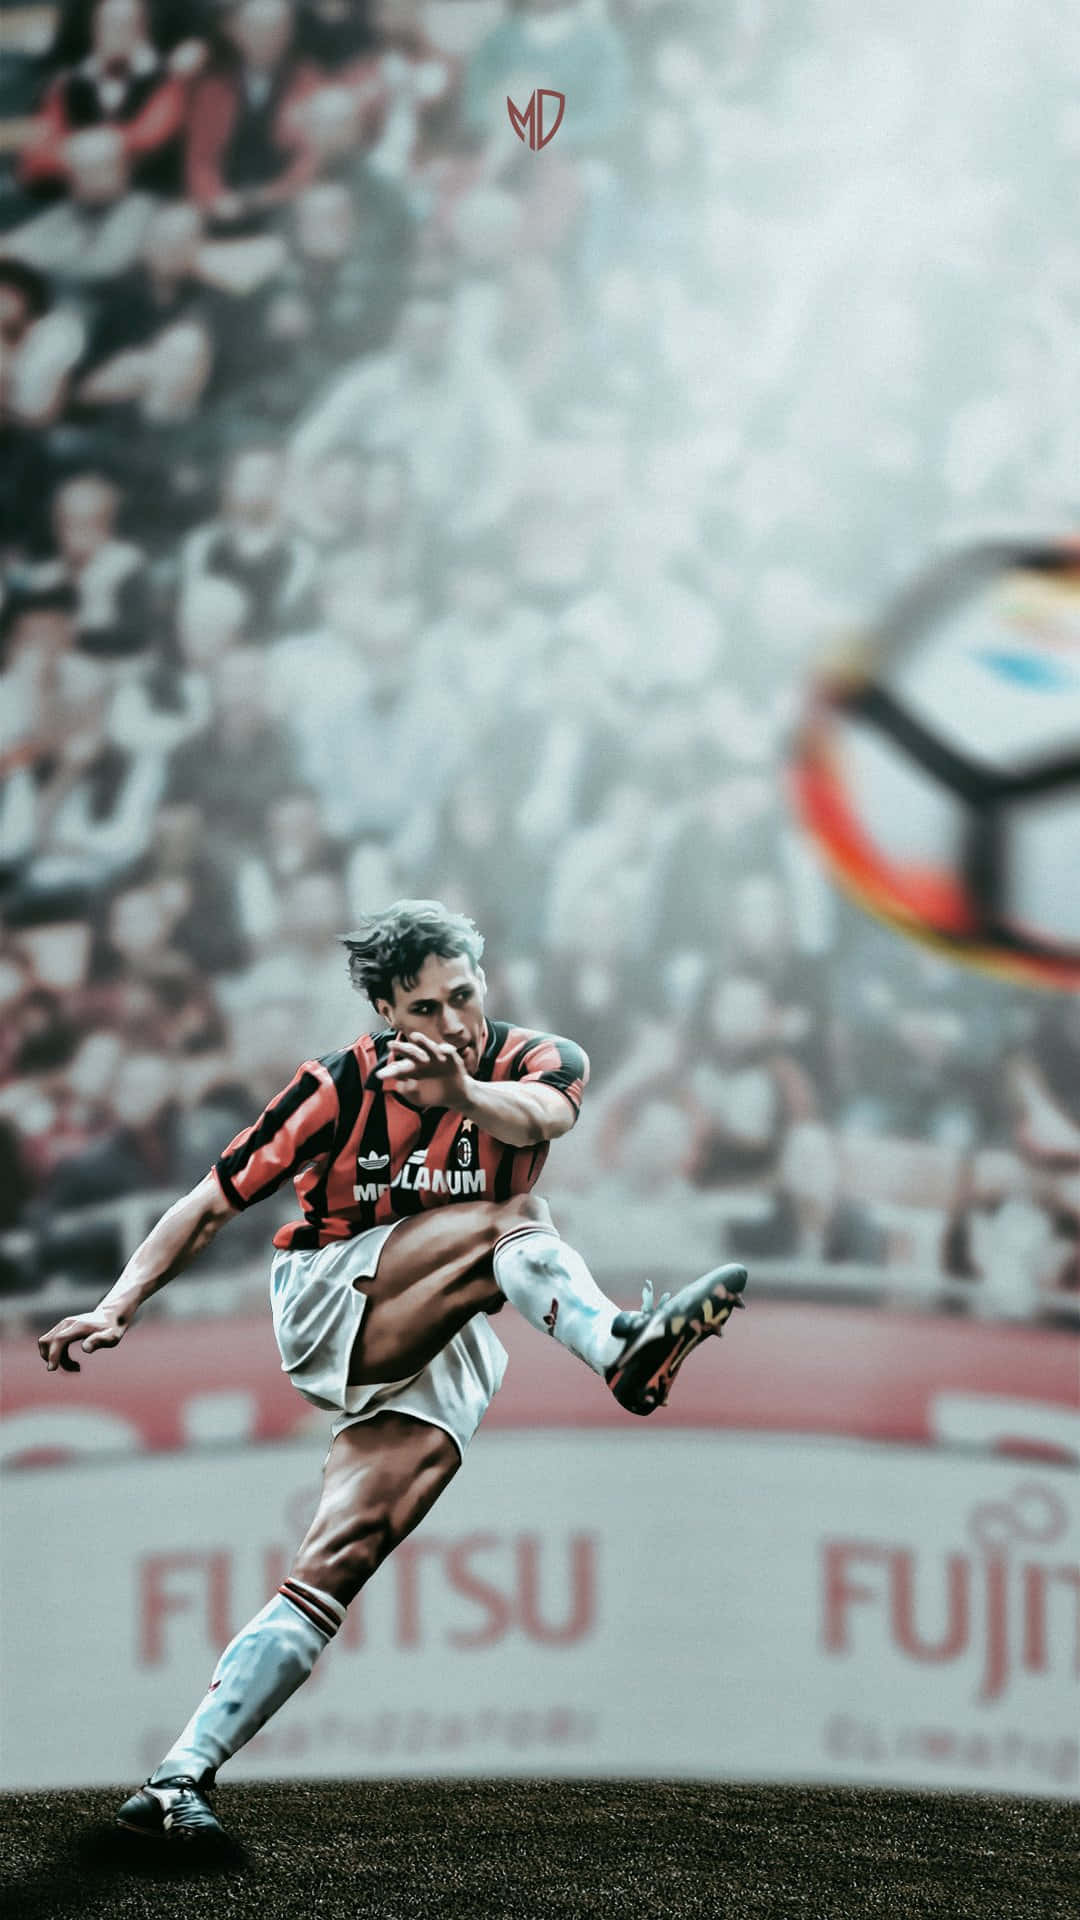 Marco Van Basten Kicking The Ball Wallpaper